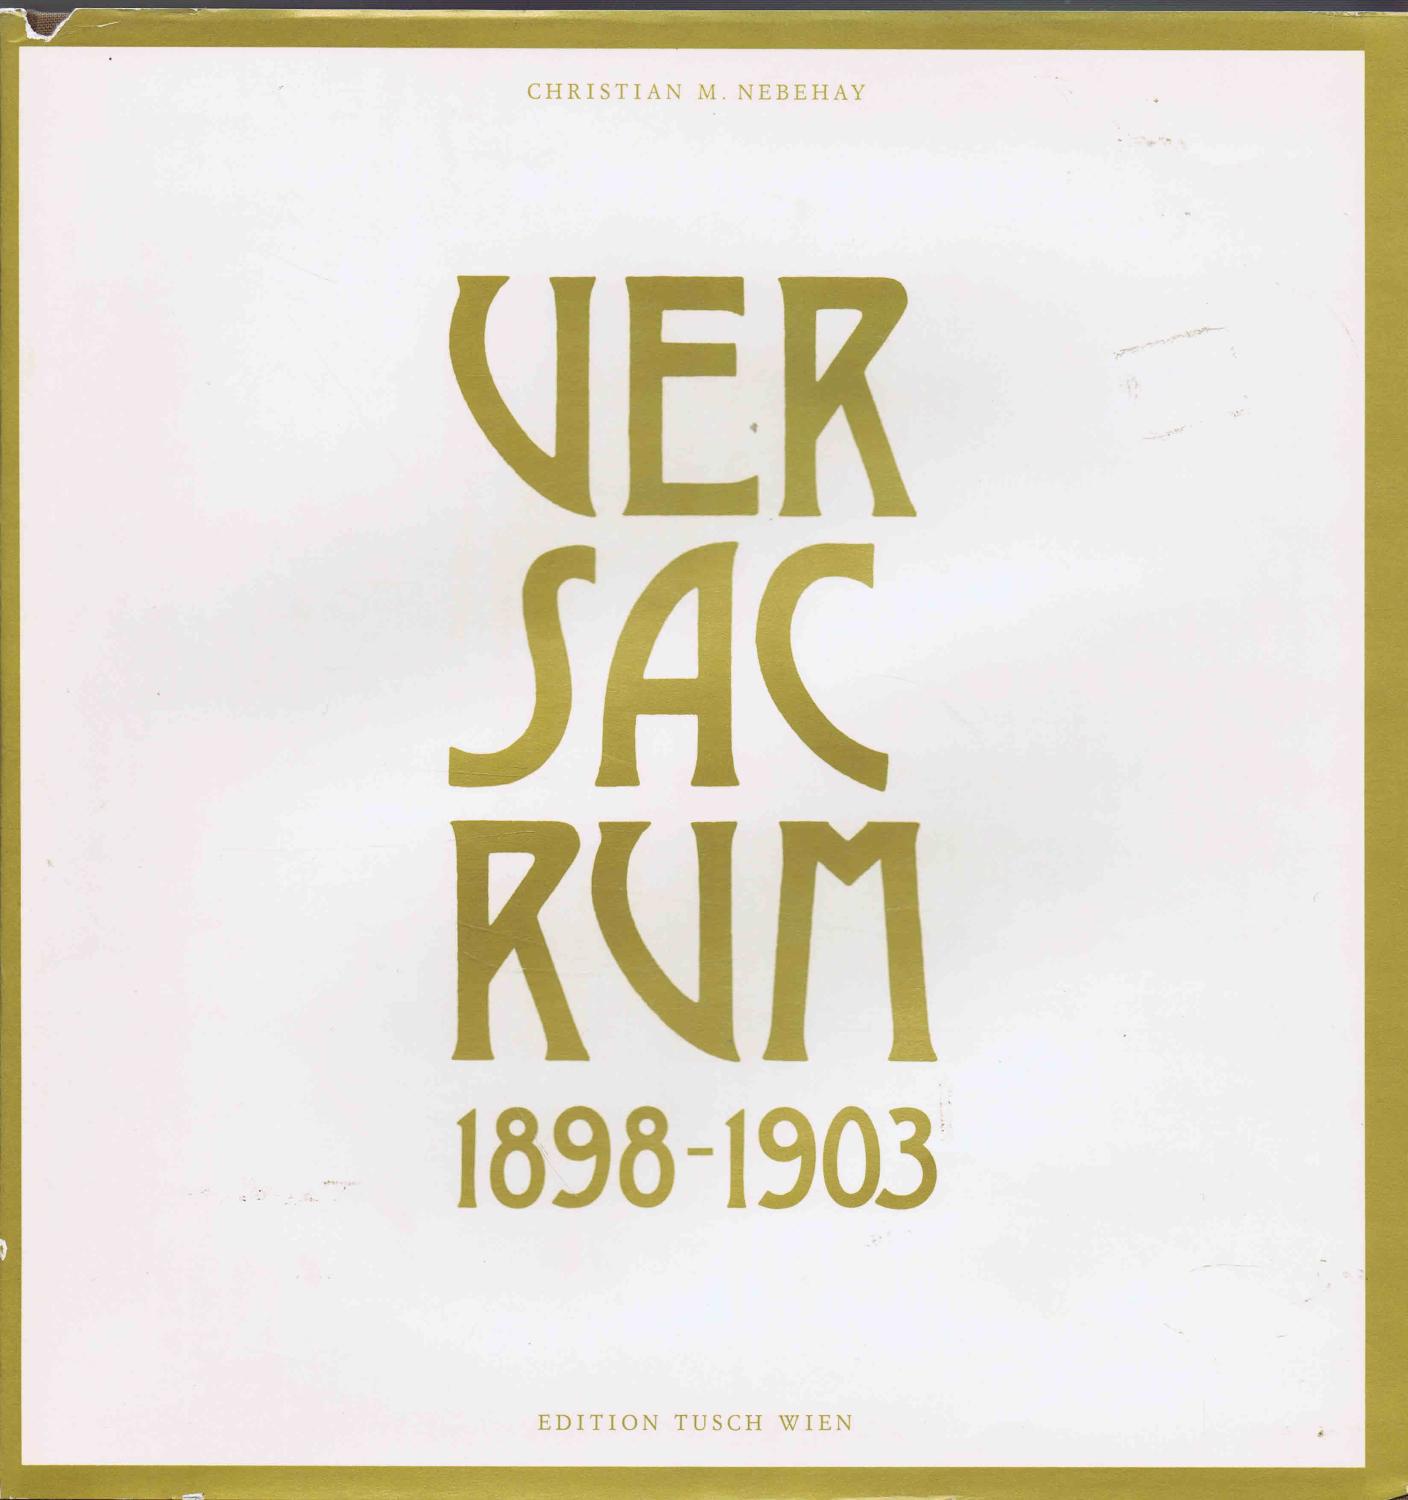 Ver sacrum 1898 - 1903 (Edition Tusch 1981) - Nebehay, Christian Michael